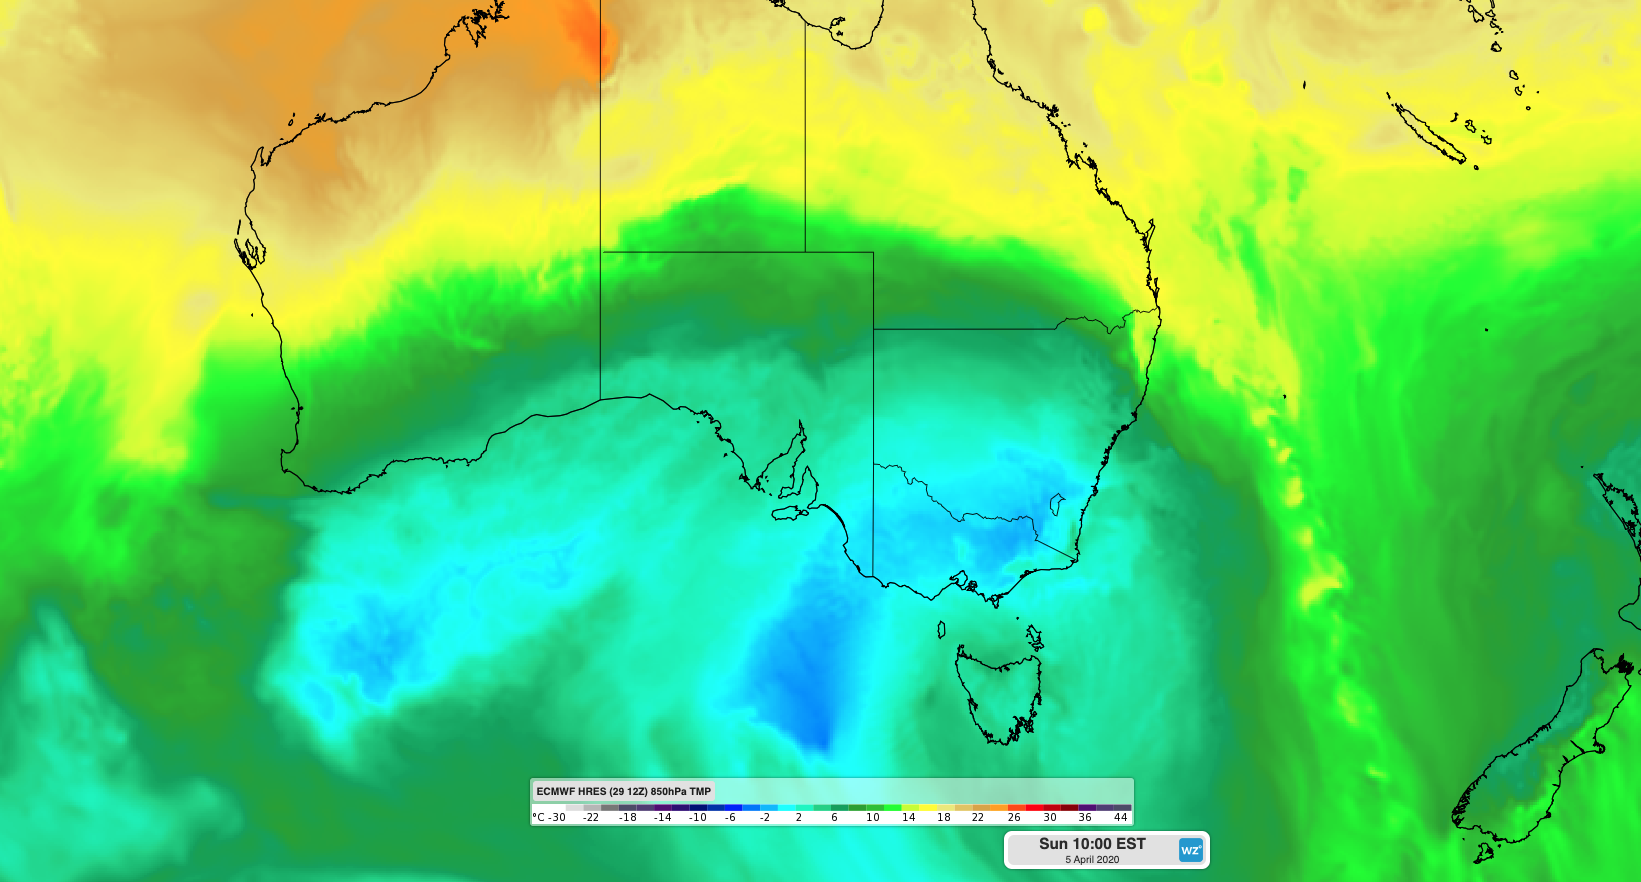 Wintry weather on the horizon for southeastern Australia